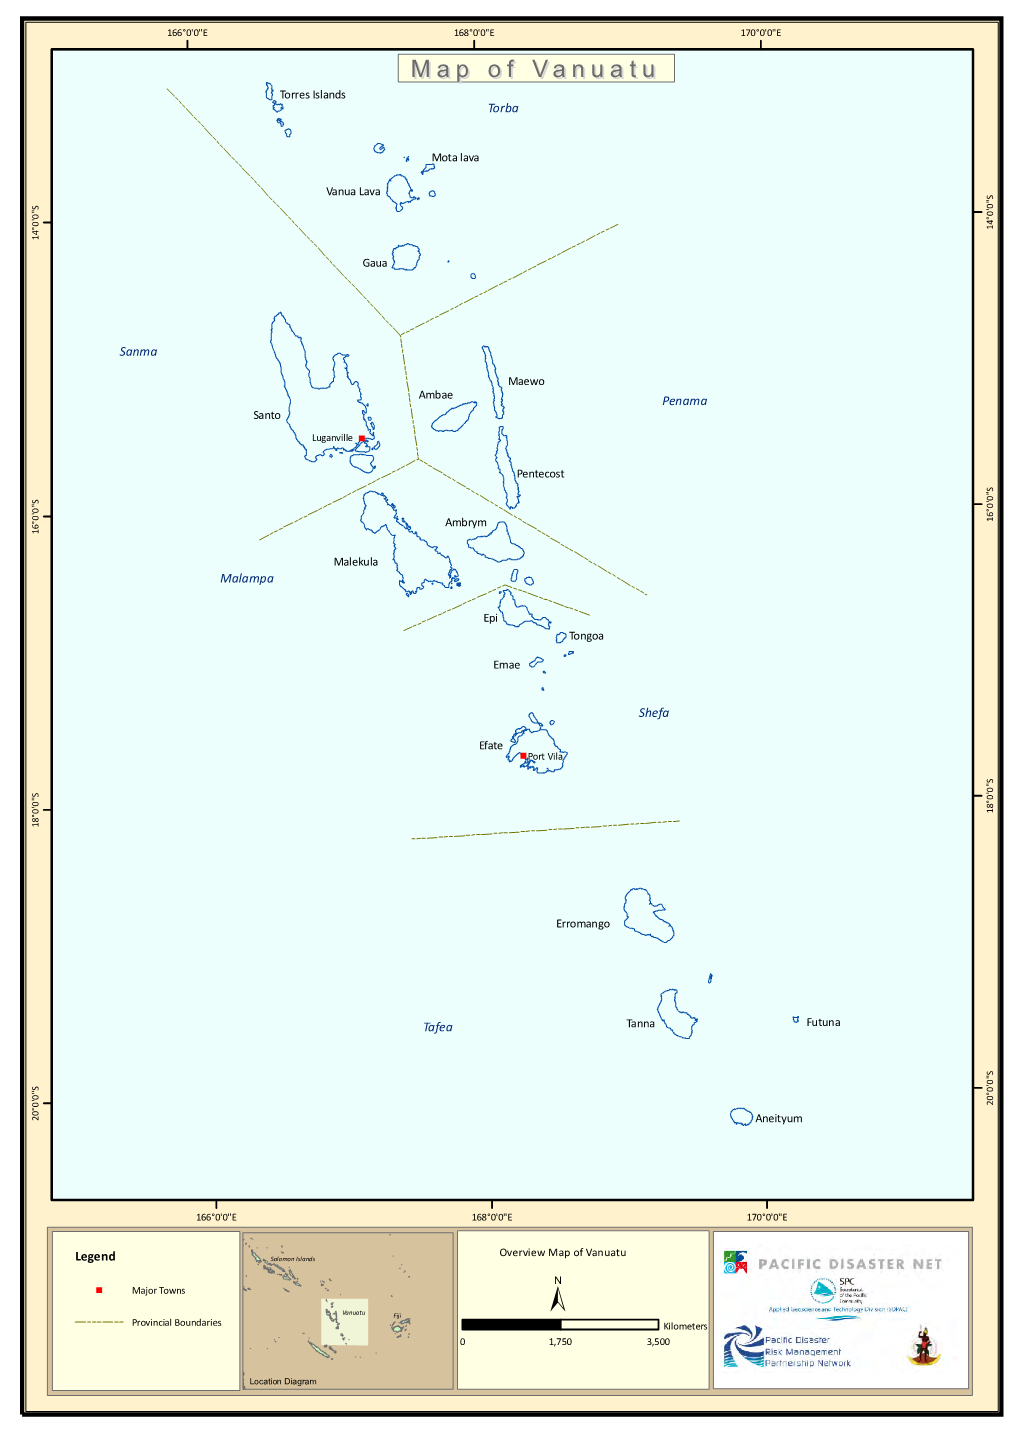 Map of Vanuatu Legend Solomon Islands " Major Towns ± Vanuatu Fiji Provincial Boundaries Kilometers 0 1,750 3,500